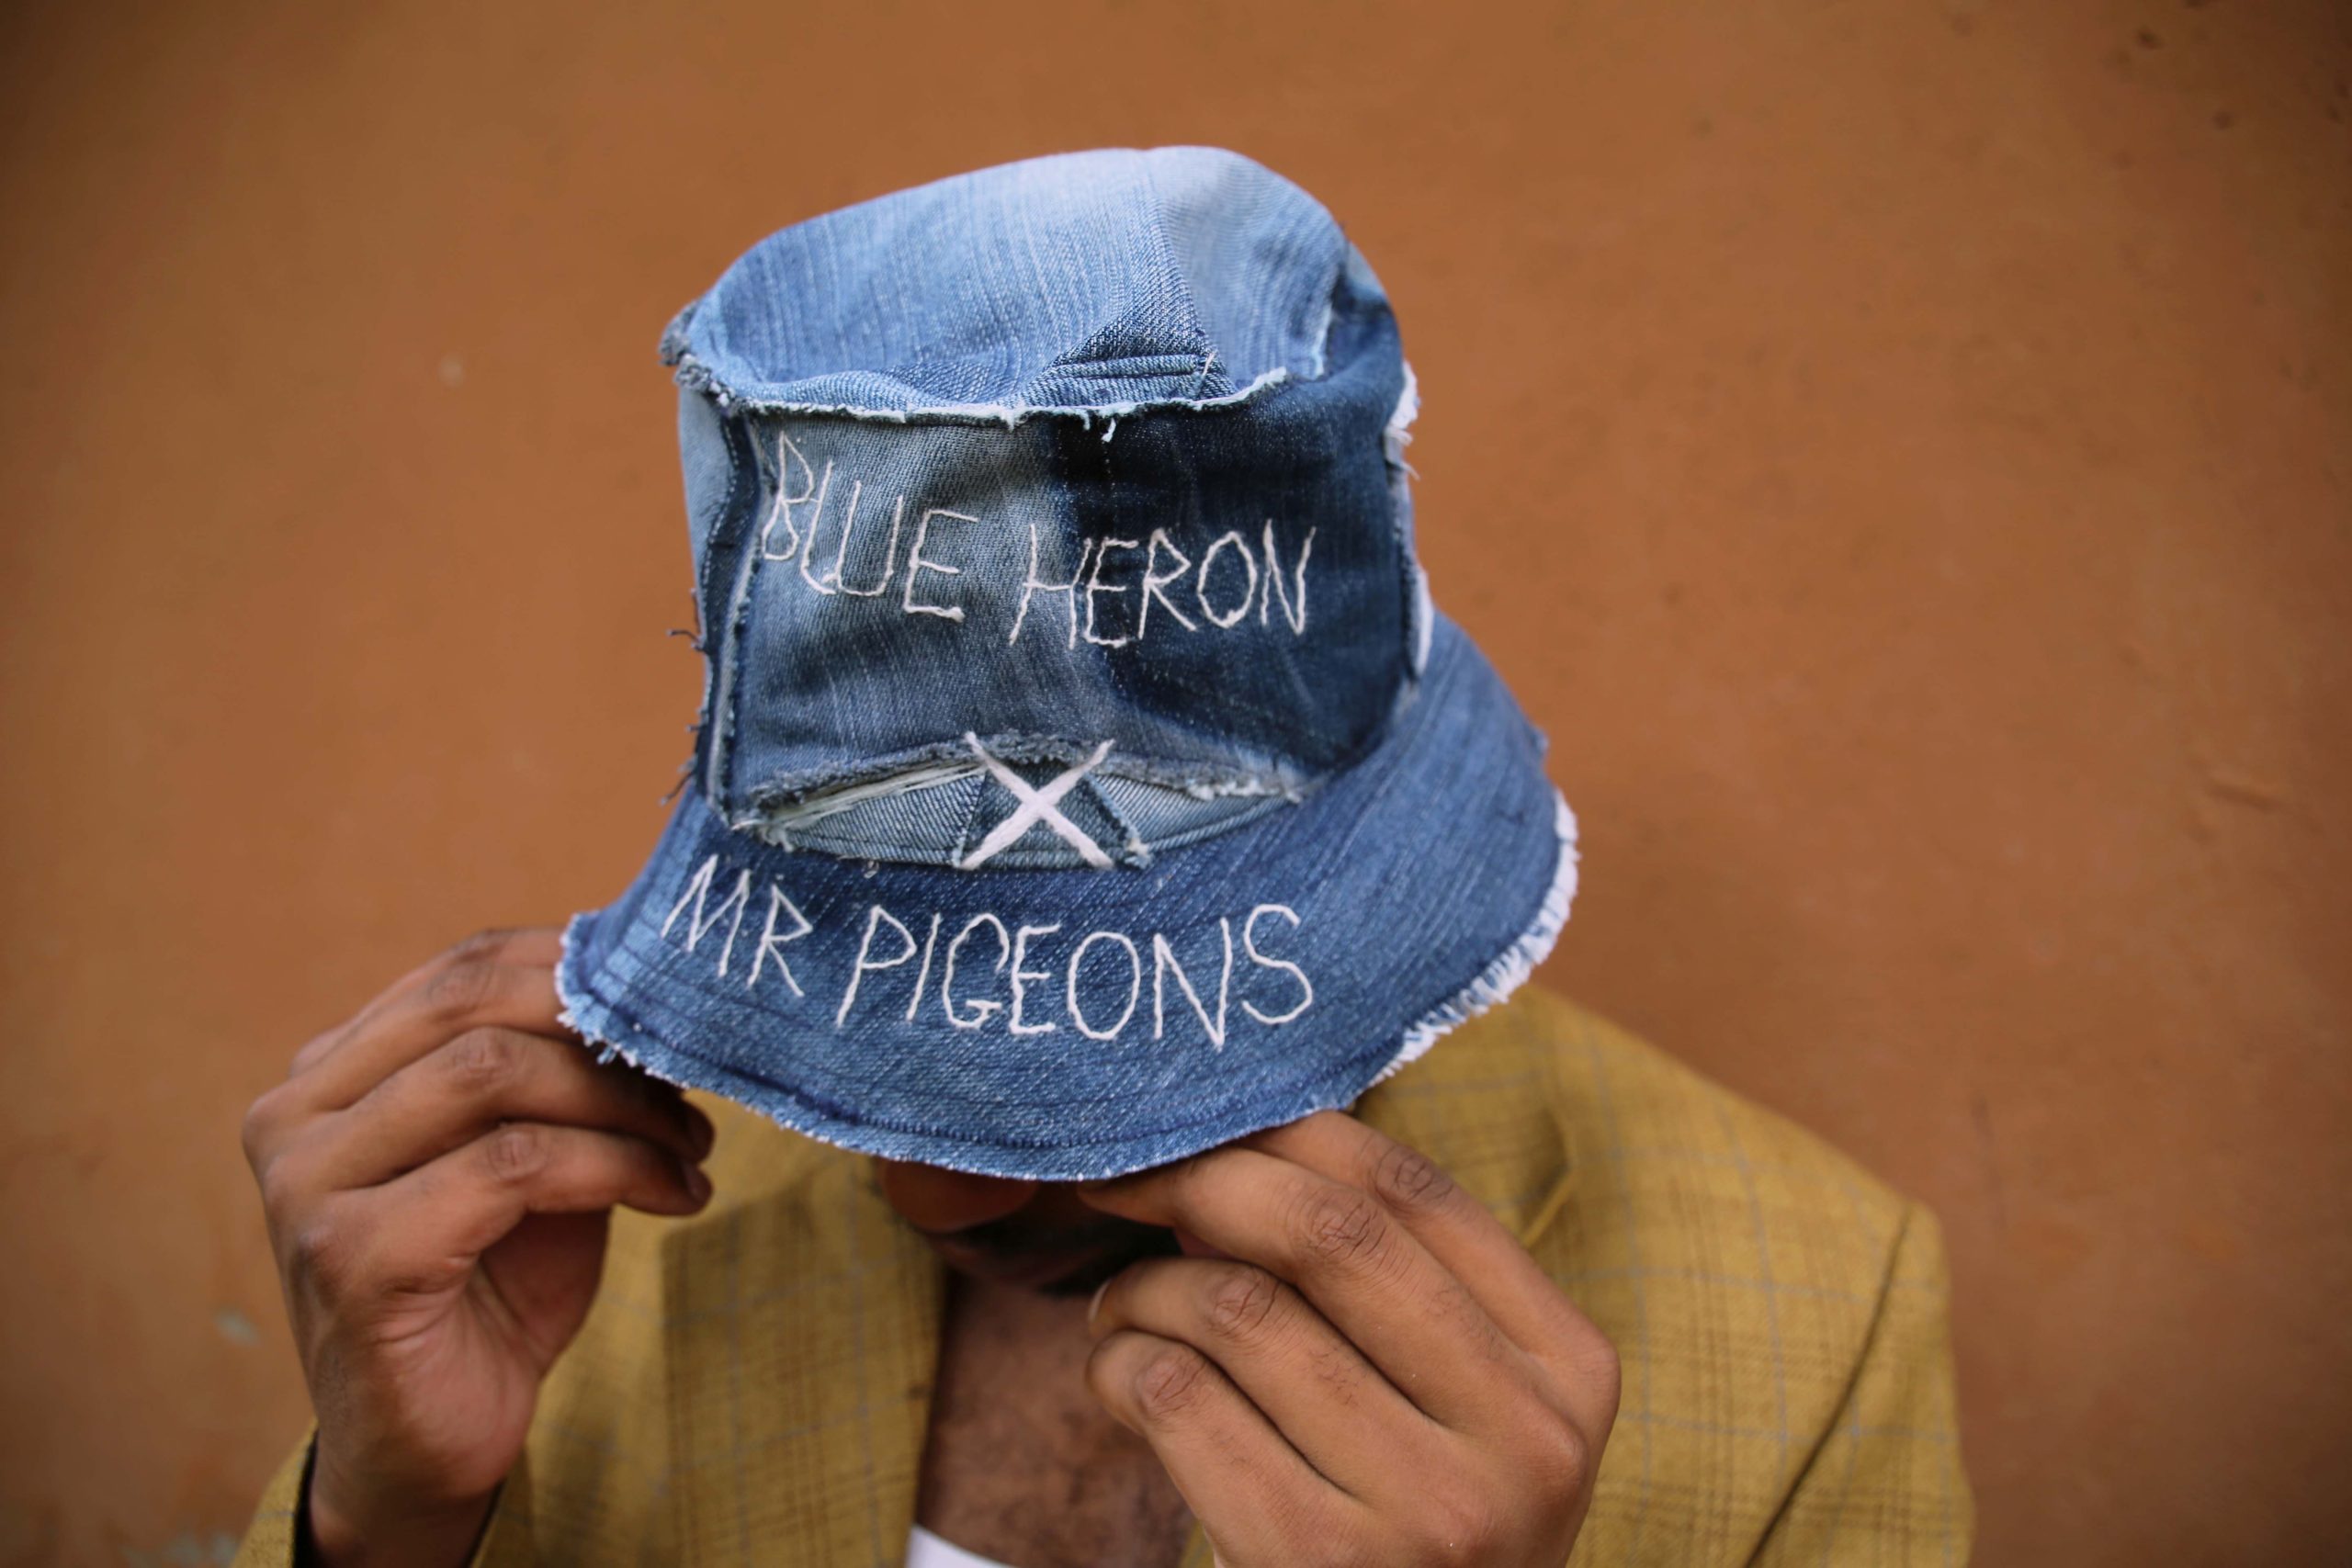 Mr Pigeons